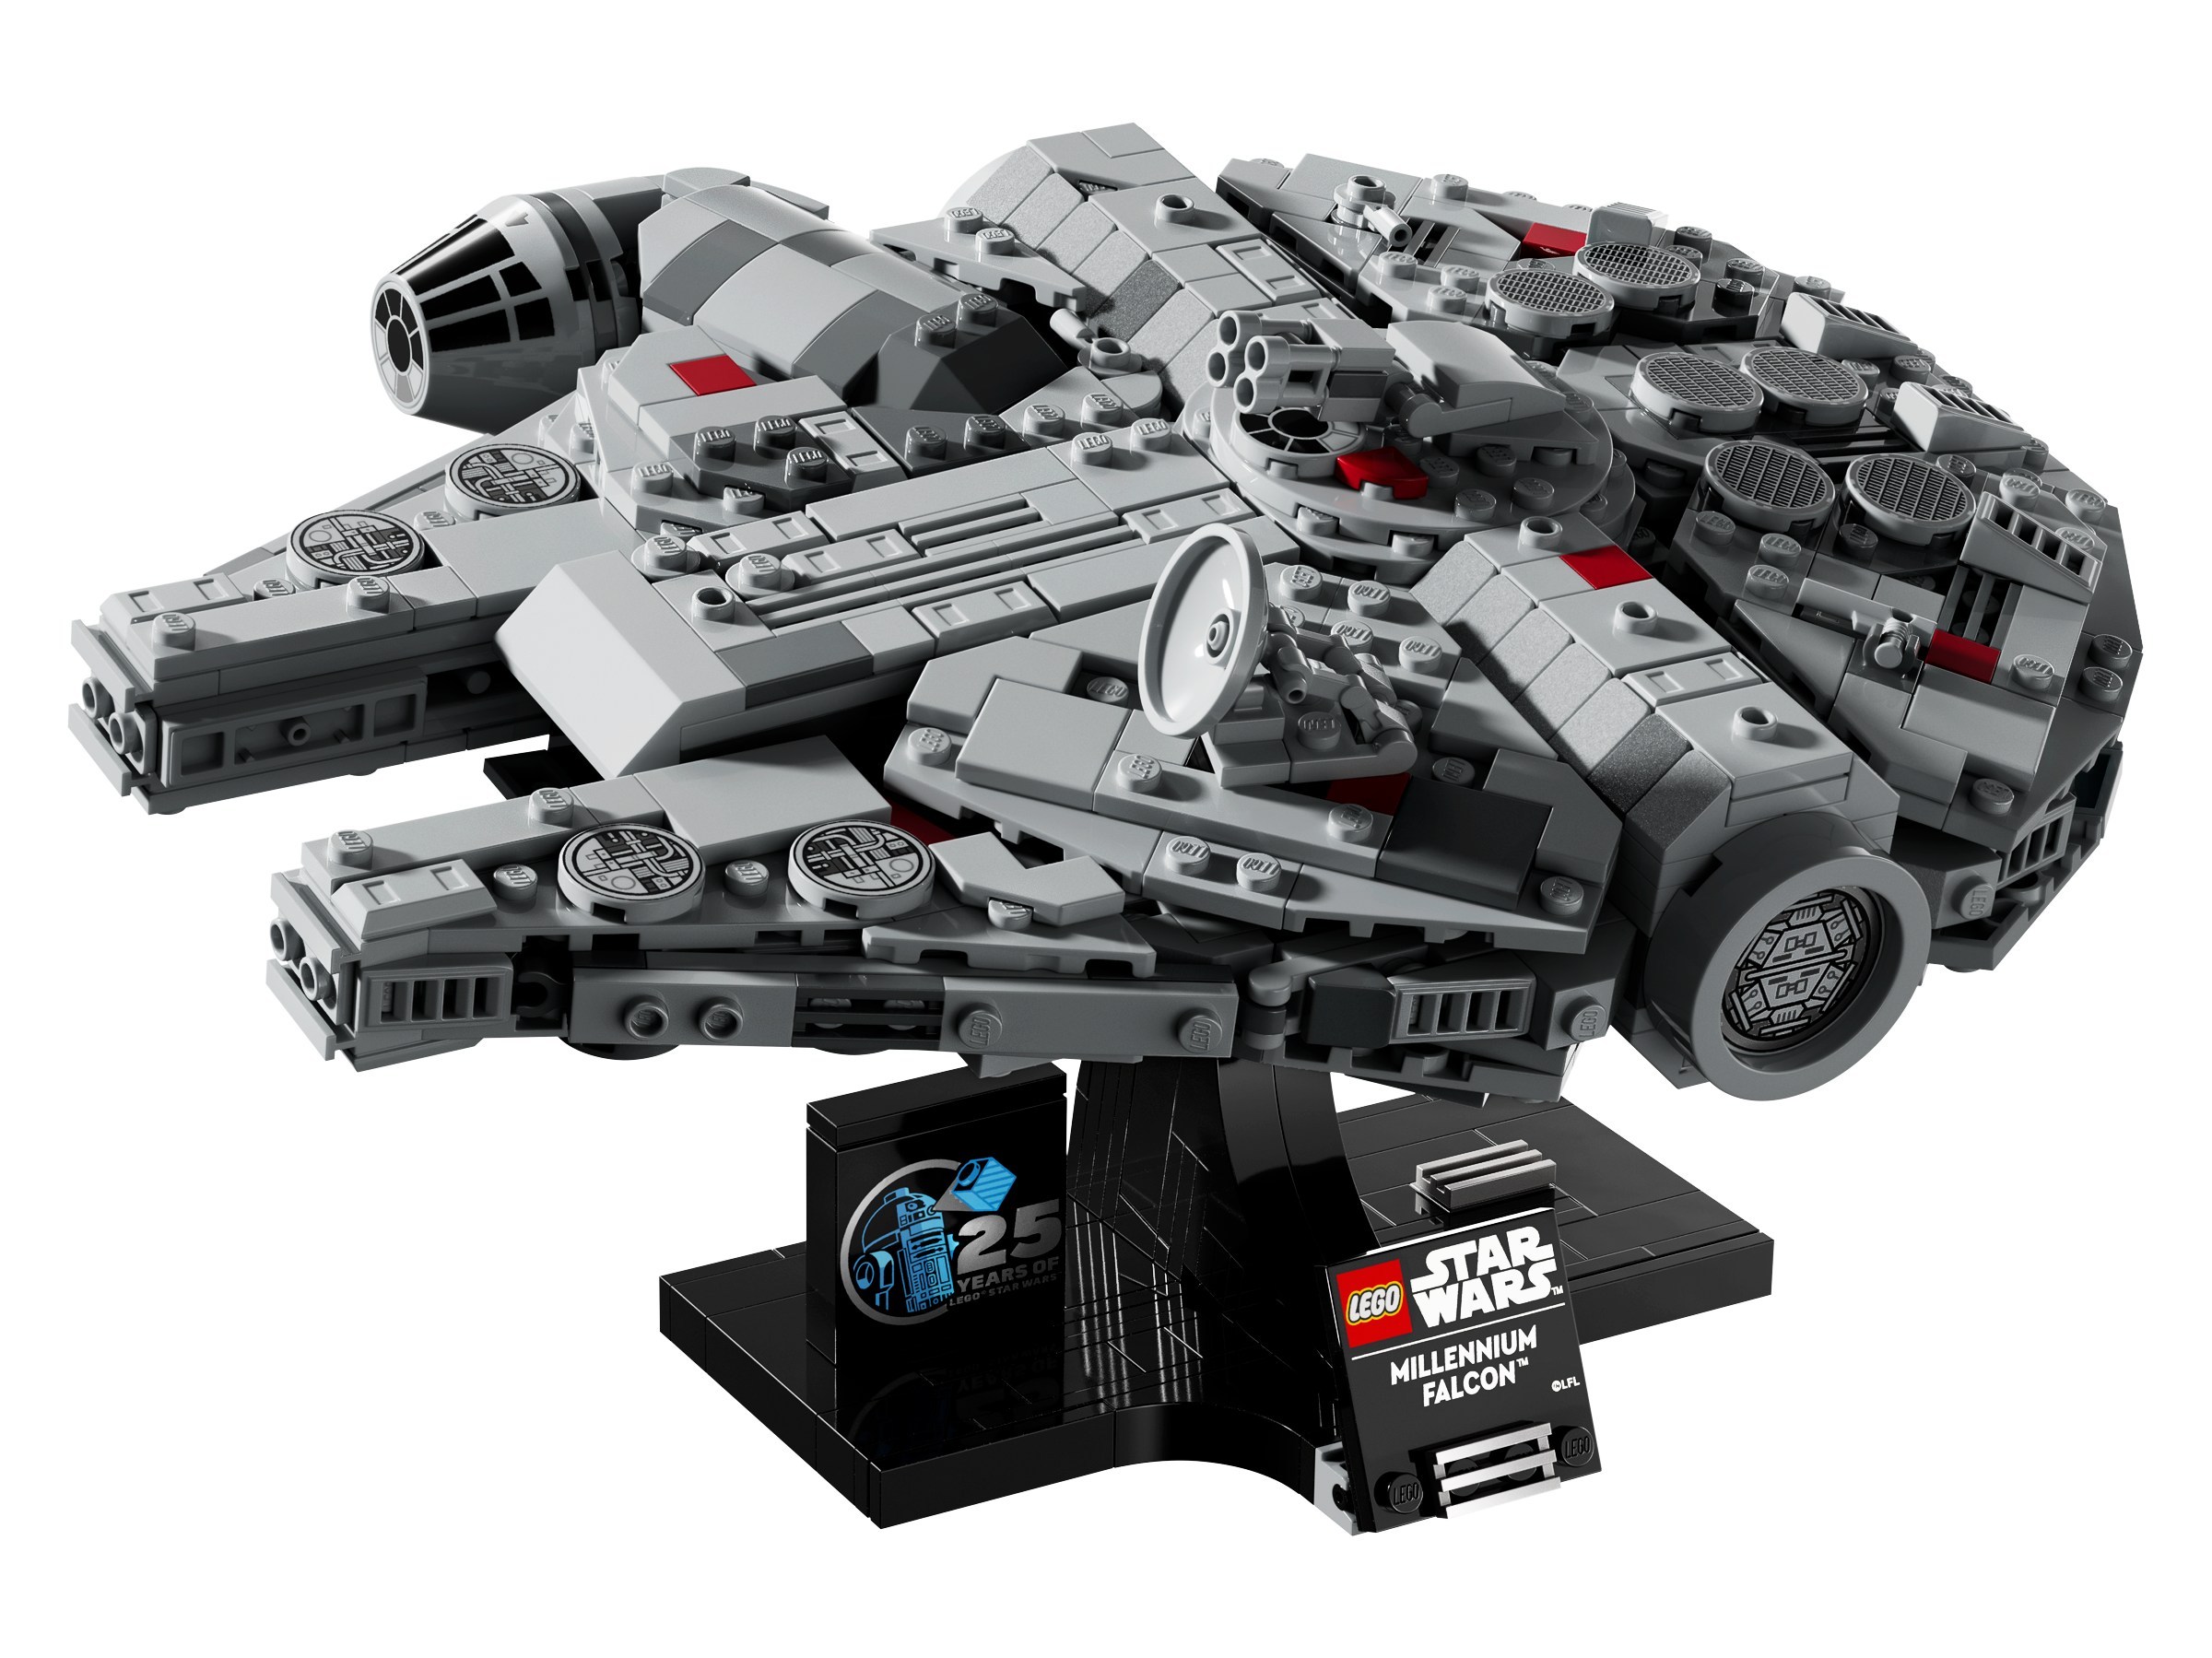 Lego 75375 Millennium Falcon